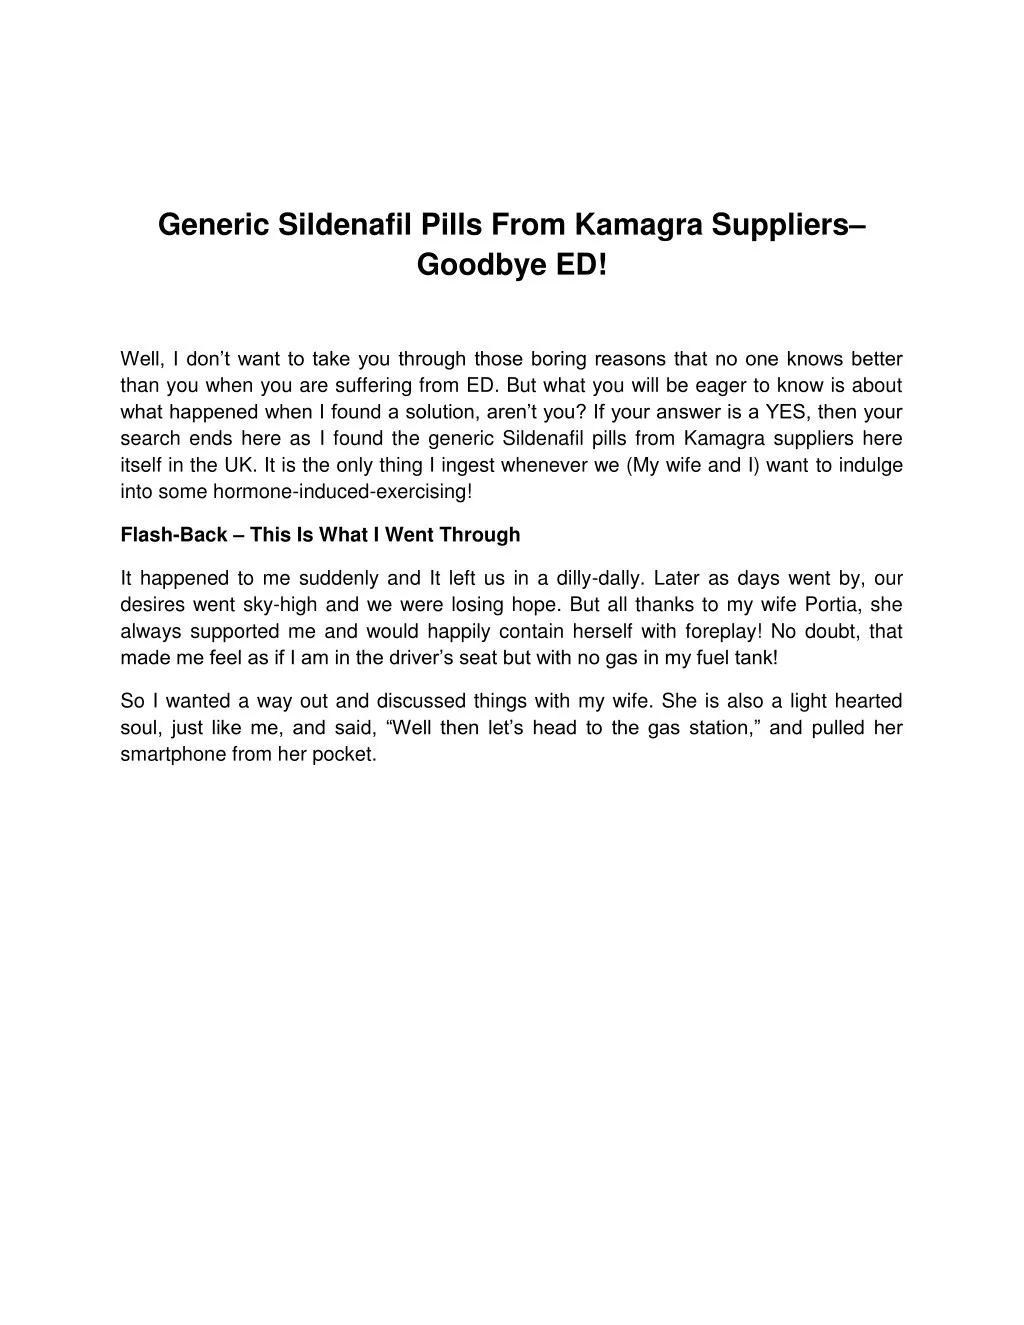 generic sildenafil pills from kamagra suppliers